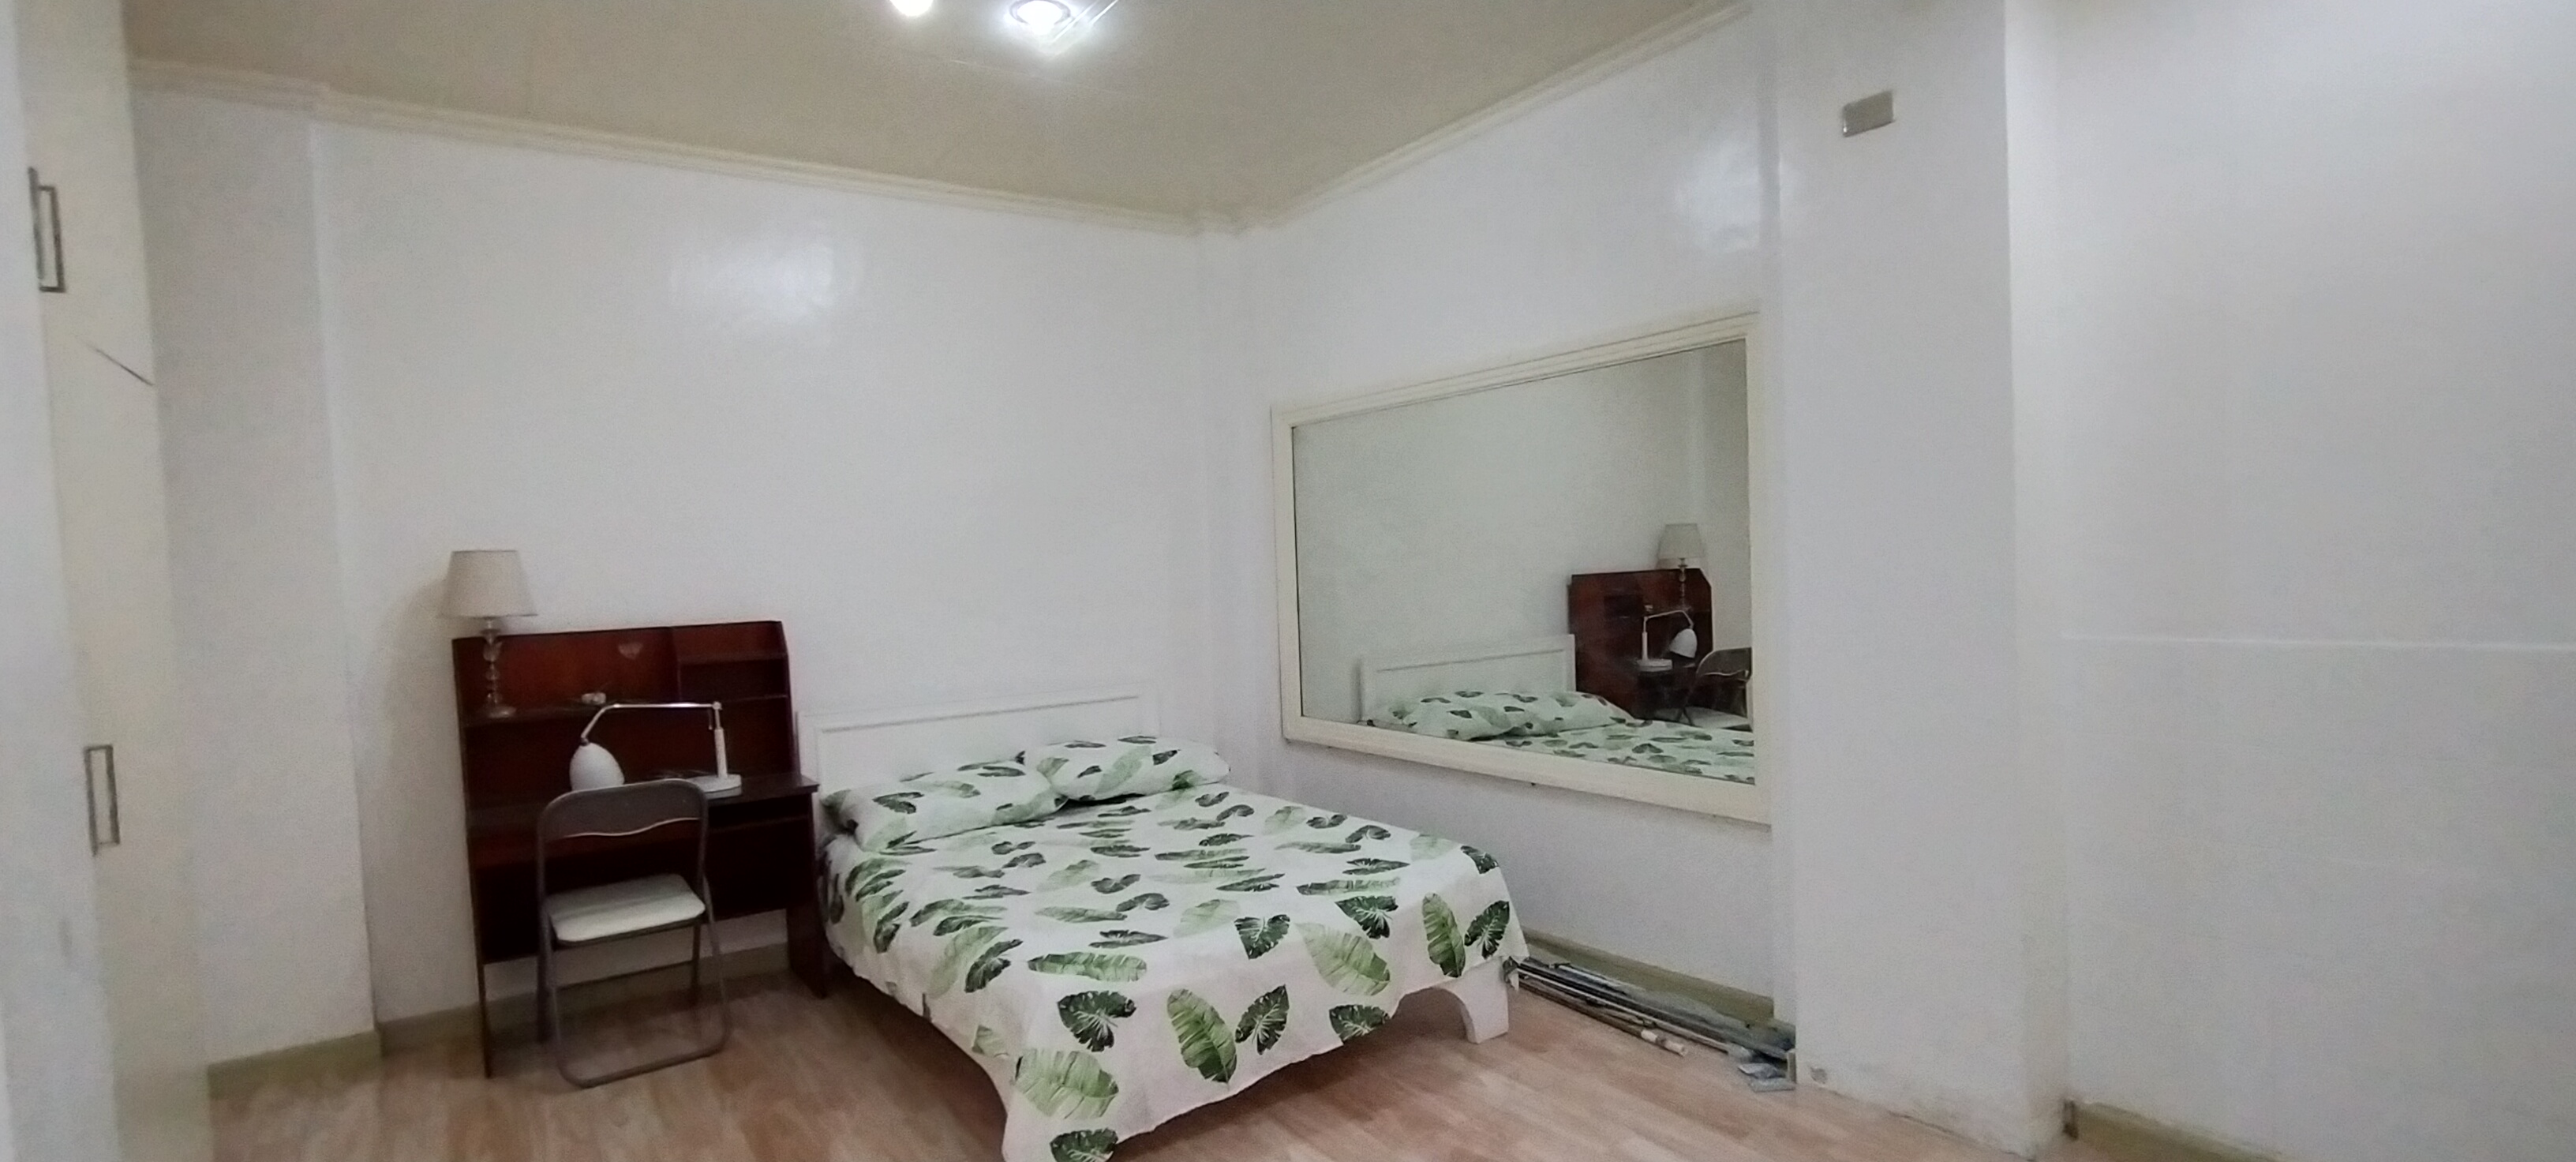 5-bedrooms-bungalow-house-located-in-banilad-cebu-city